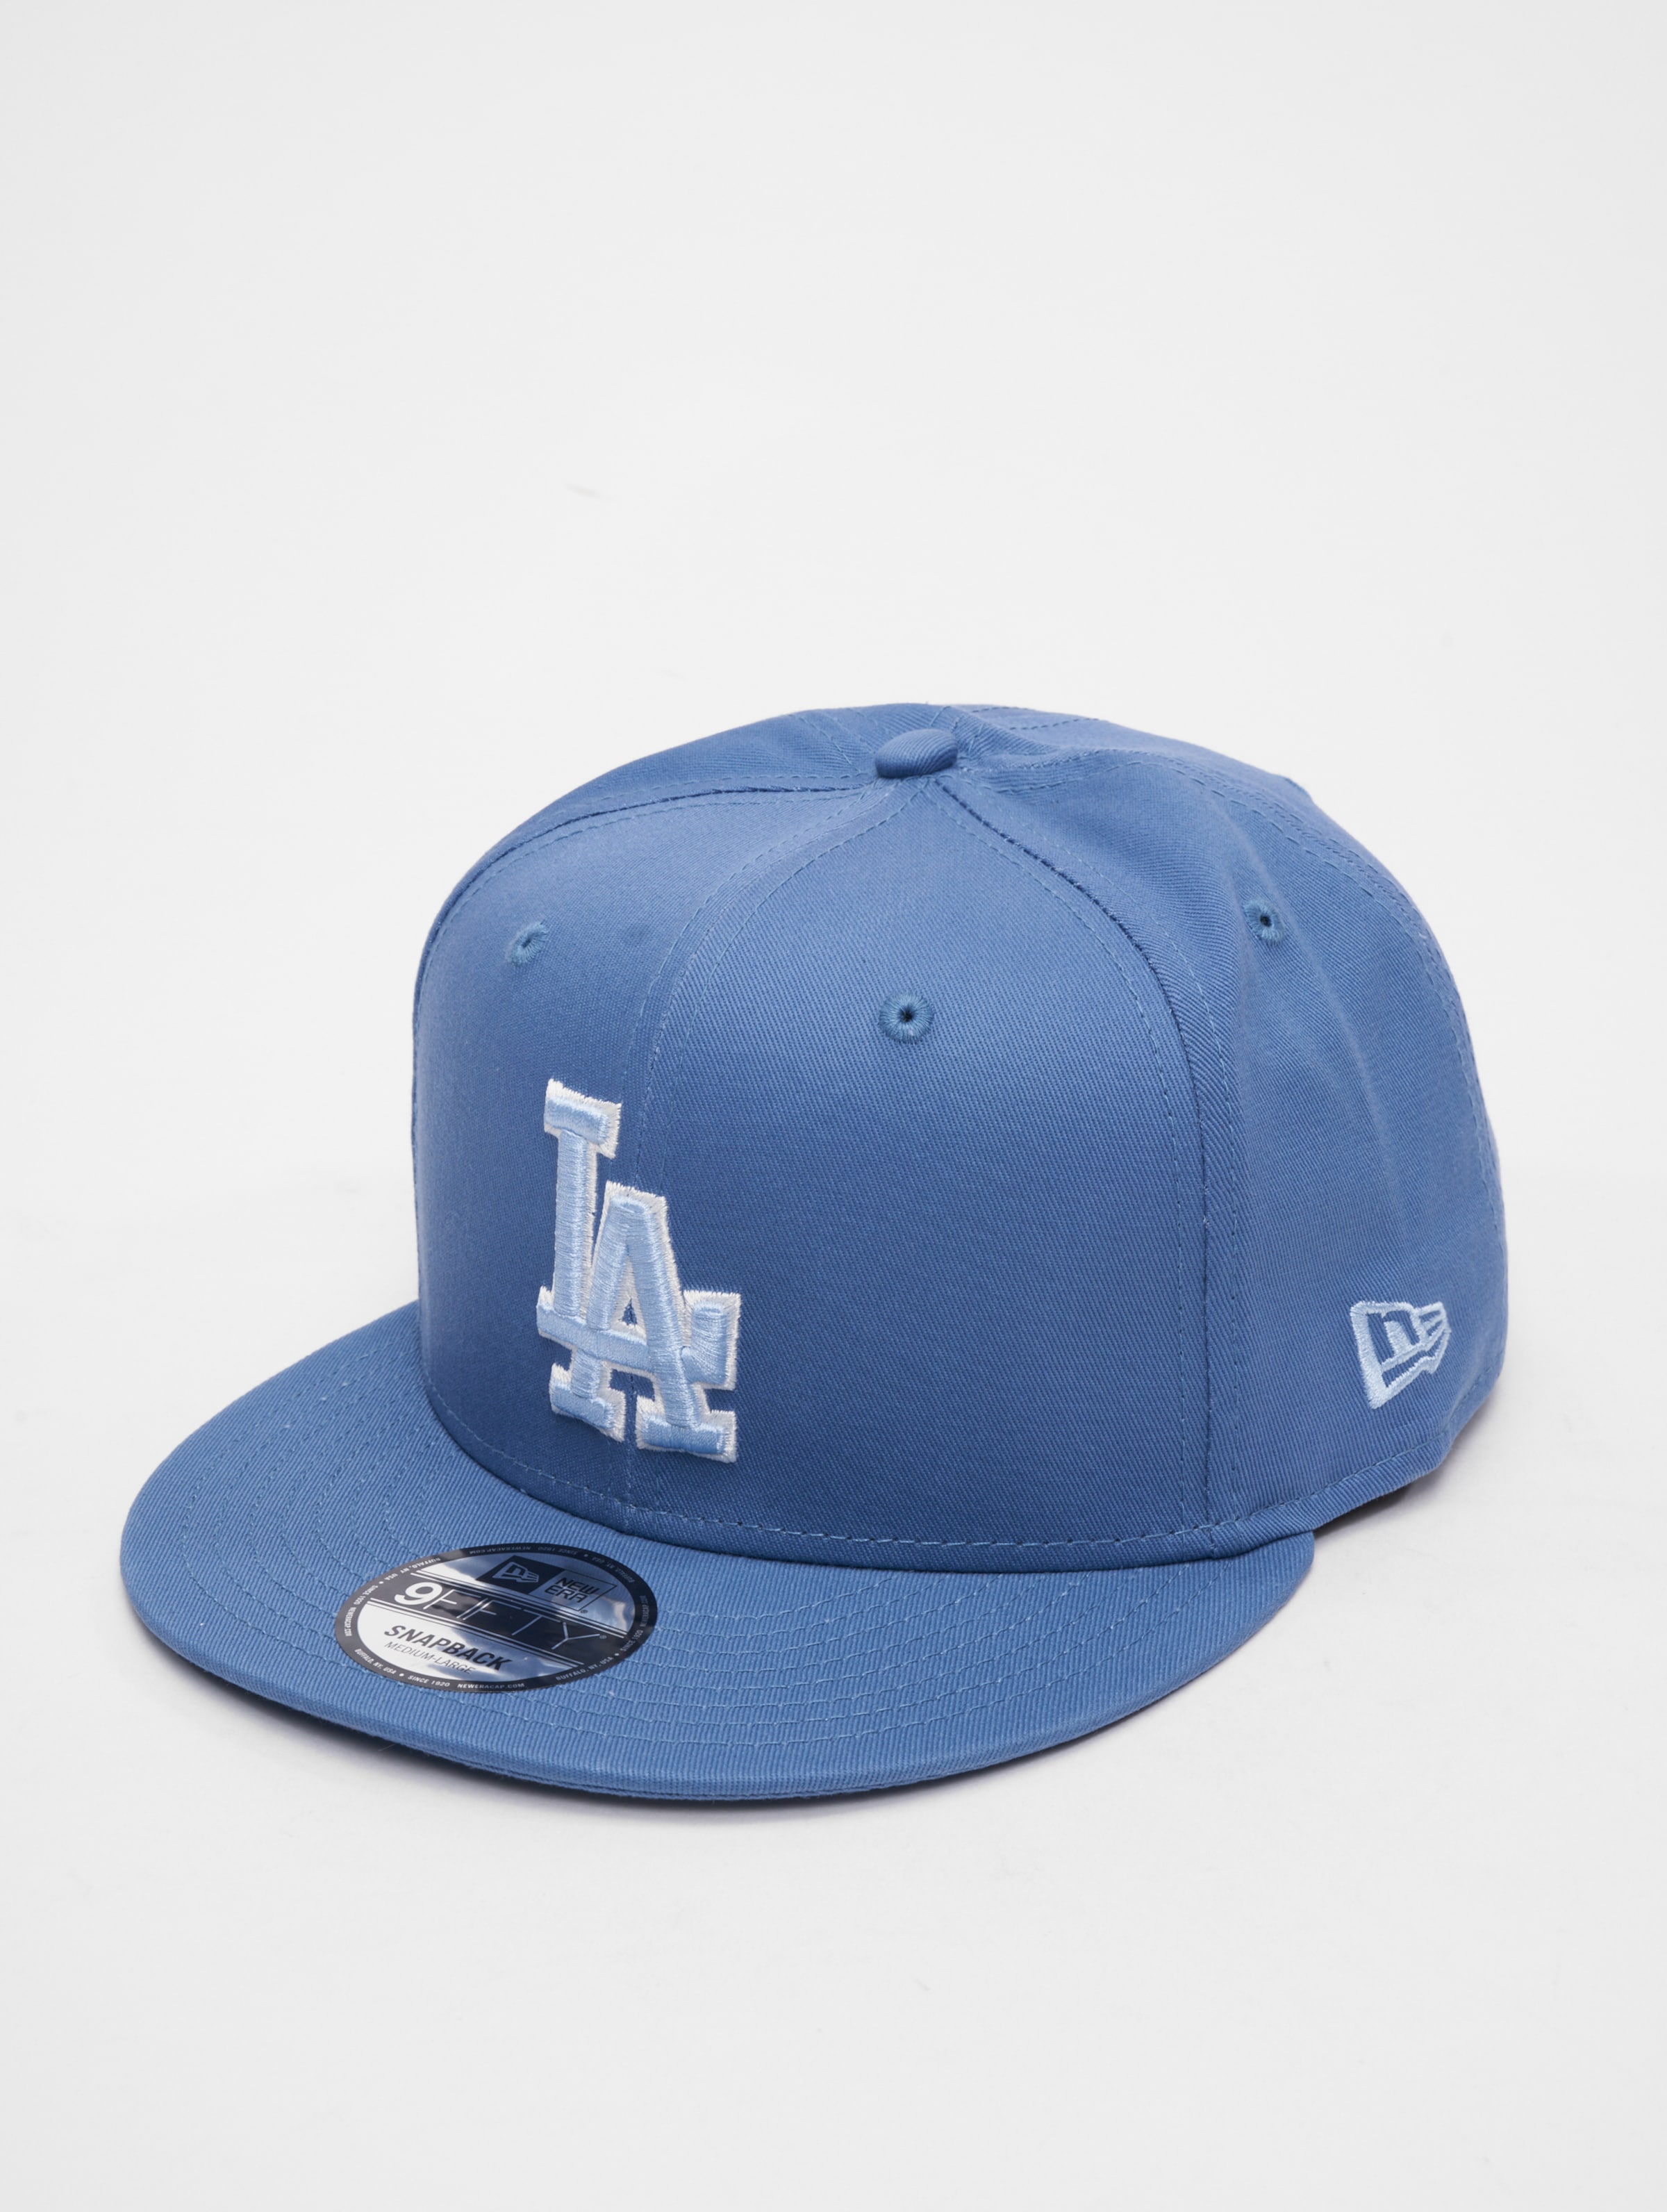 New Era MLB PATCH 9FIFTY LA Dodgers CO Snapback Caps Frauen,Männer,Unisex op kleur blauw, Maat SM